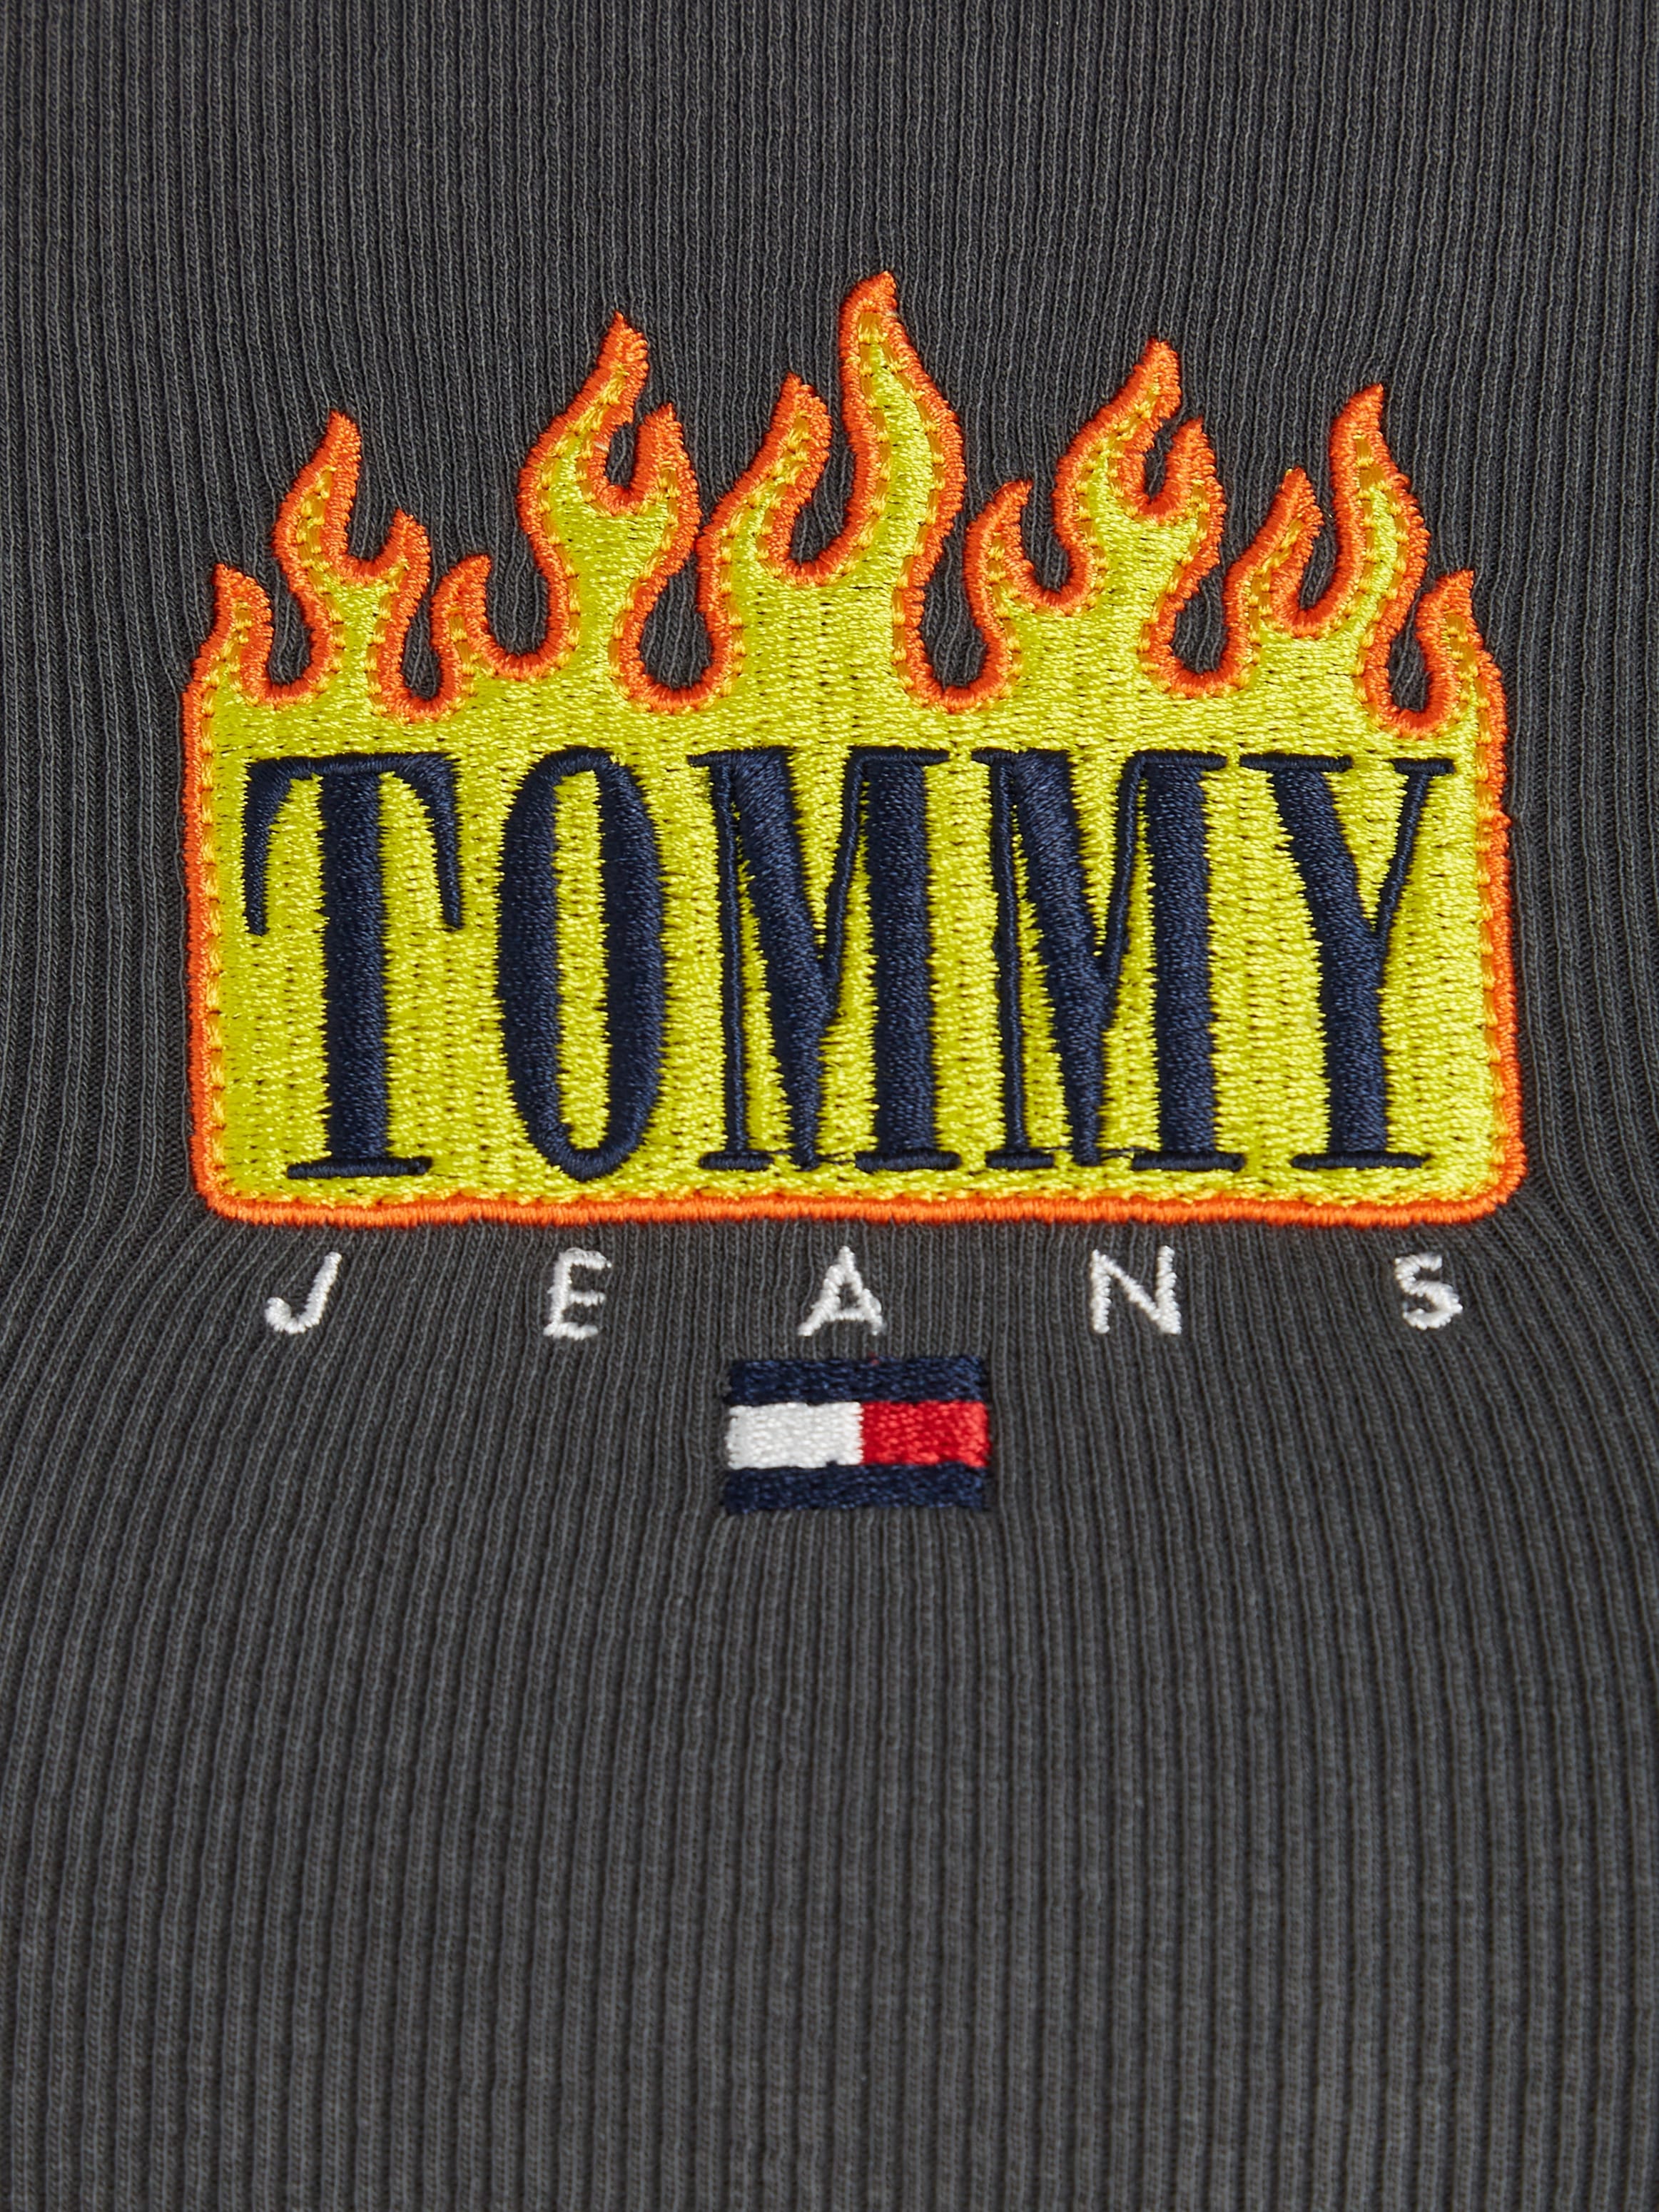 Tommy Jeans Tanktop »TJW VINTAGE FLAME TANK«